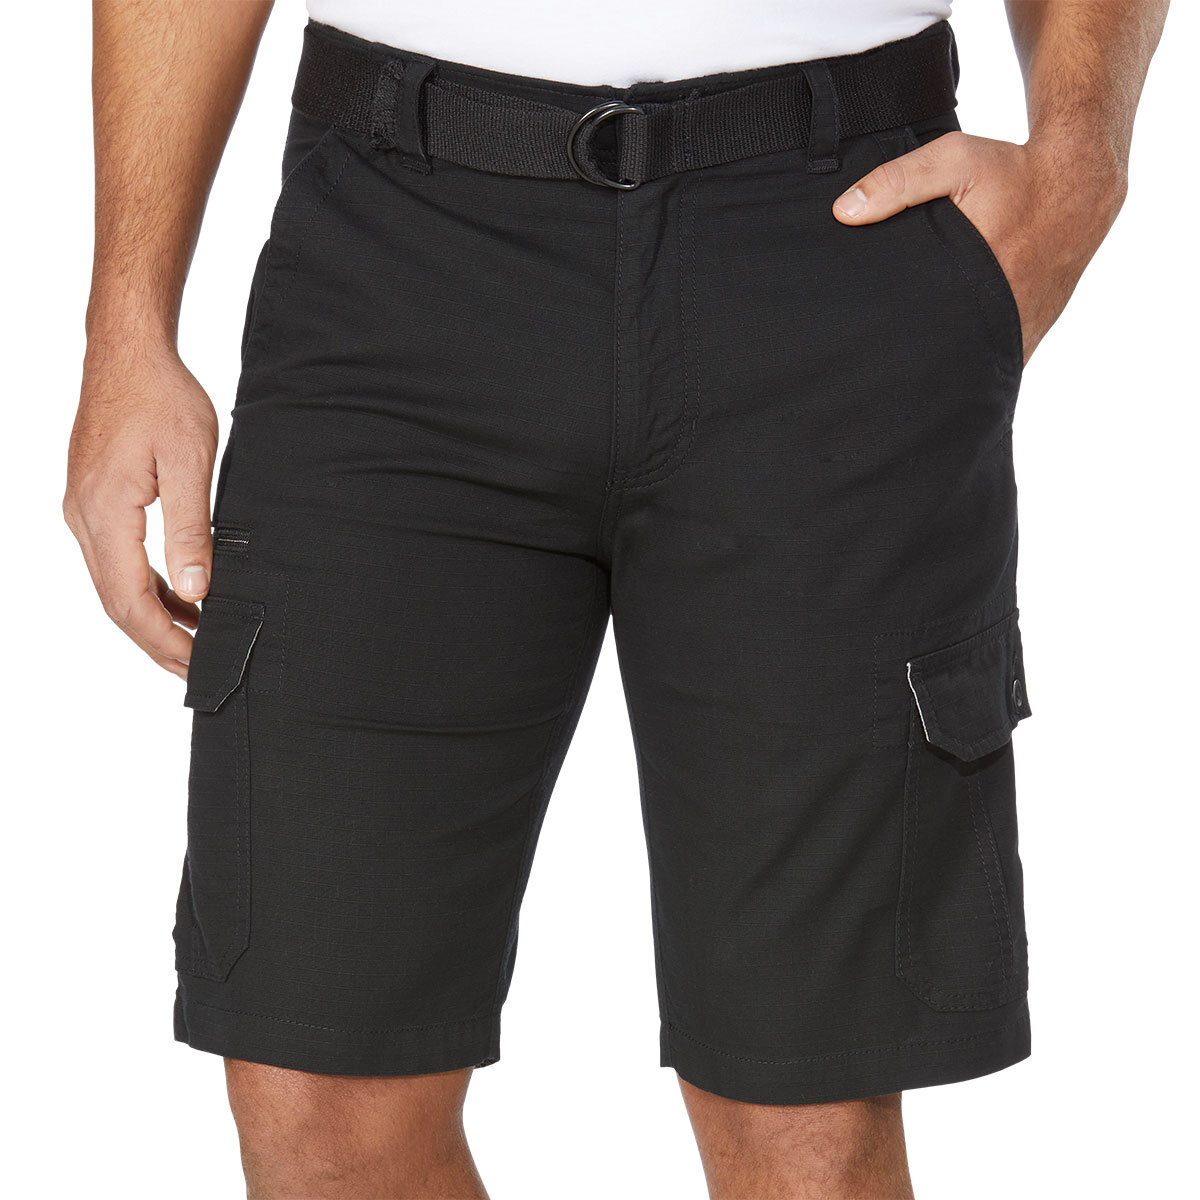 Front image of black shorts